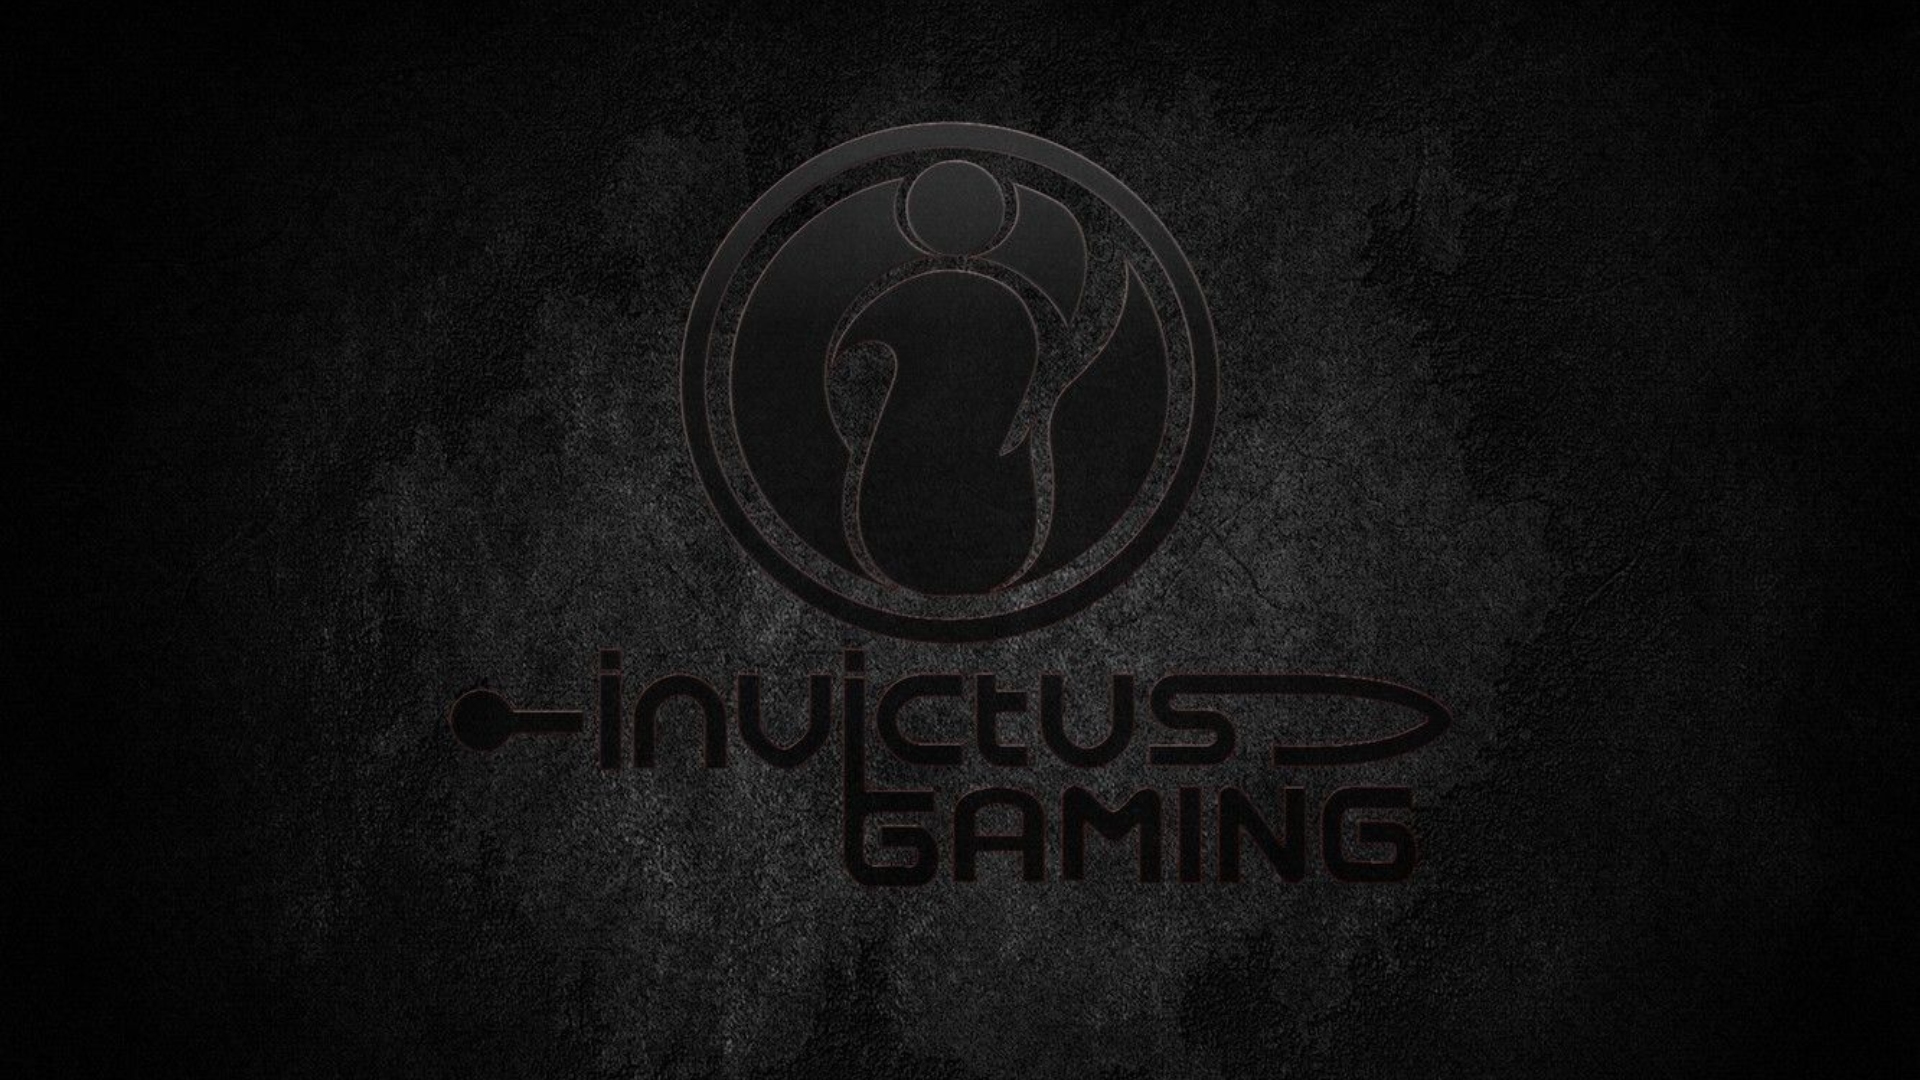 Invictus Gaming Background Pictures